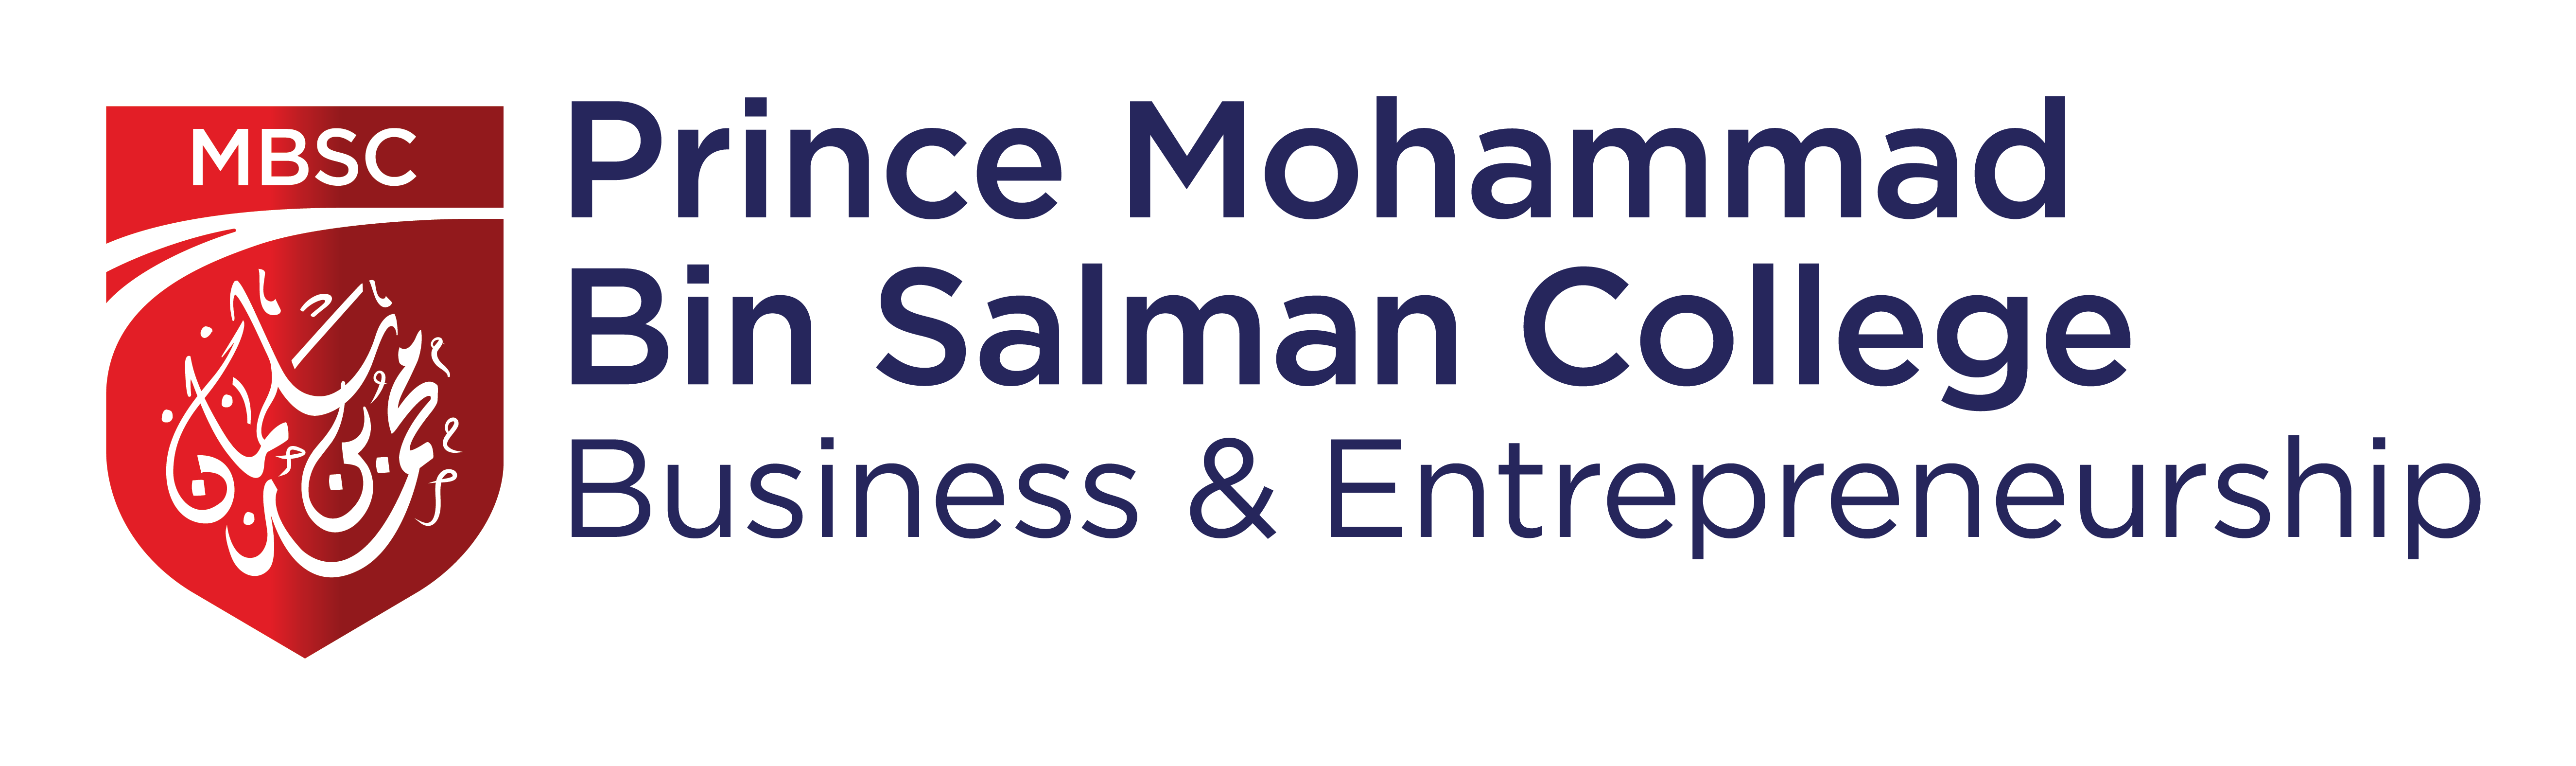 Prince Mohammad Bin Salman College of Business & Entrepreneurship ( MBSC )